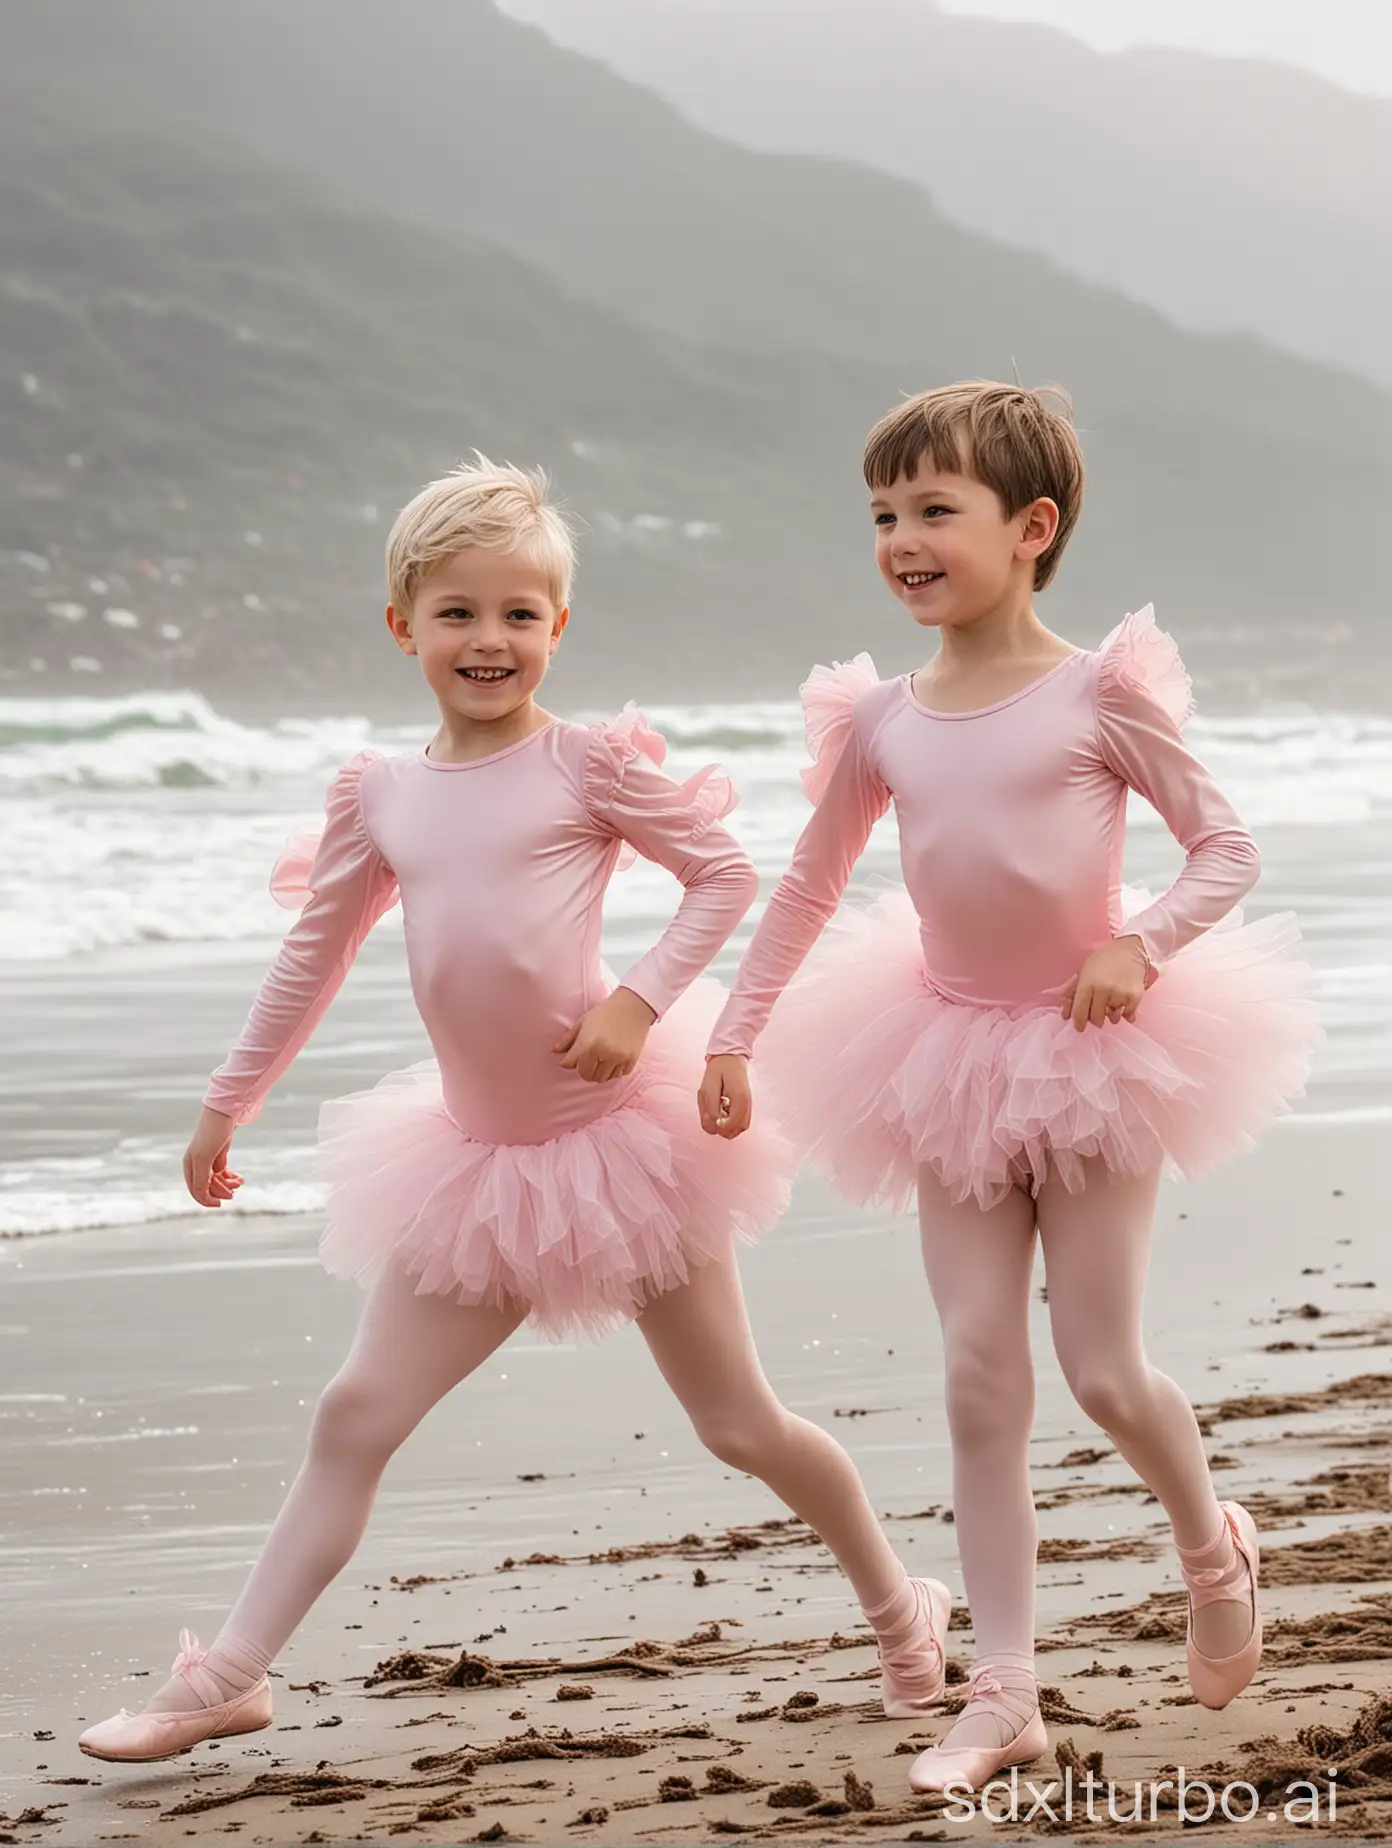 Playful-Boys-in-Pink-Ballerina-Costumes-Enjoying-Beach-Run